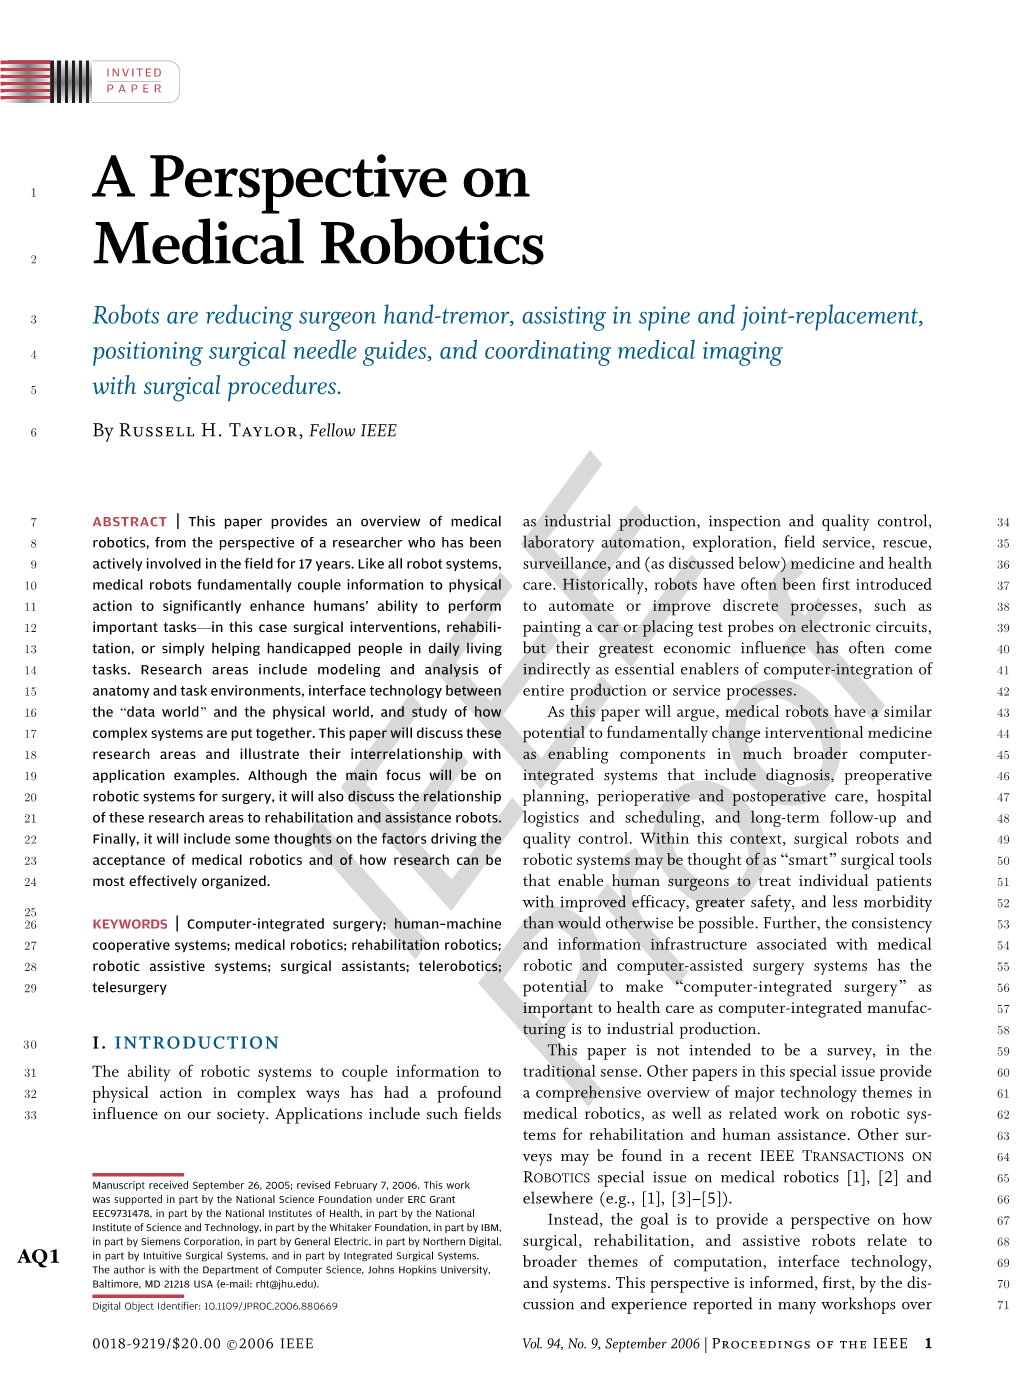 A Perspective on Medical Robotics